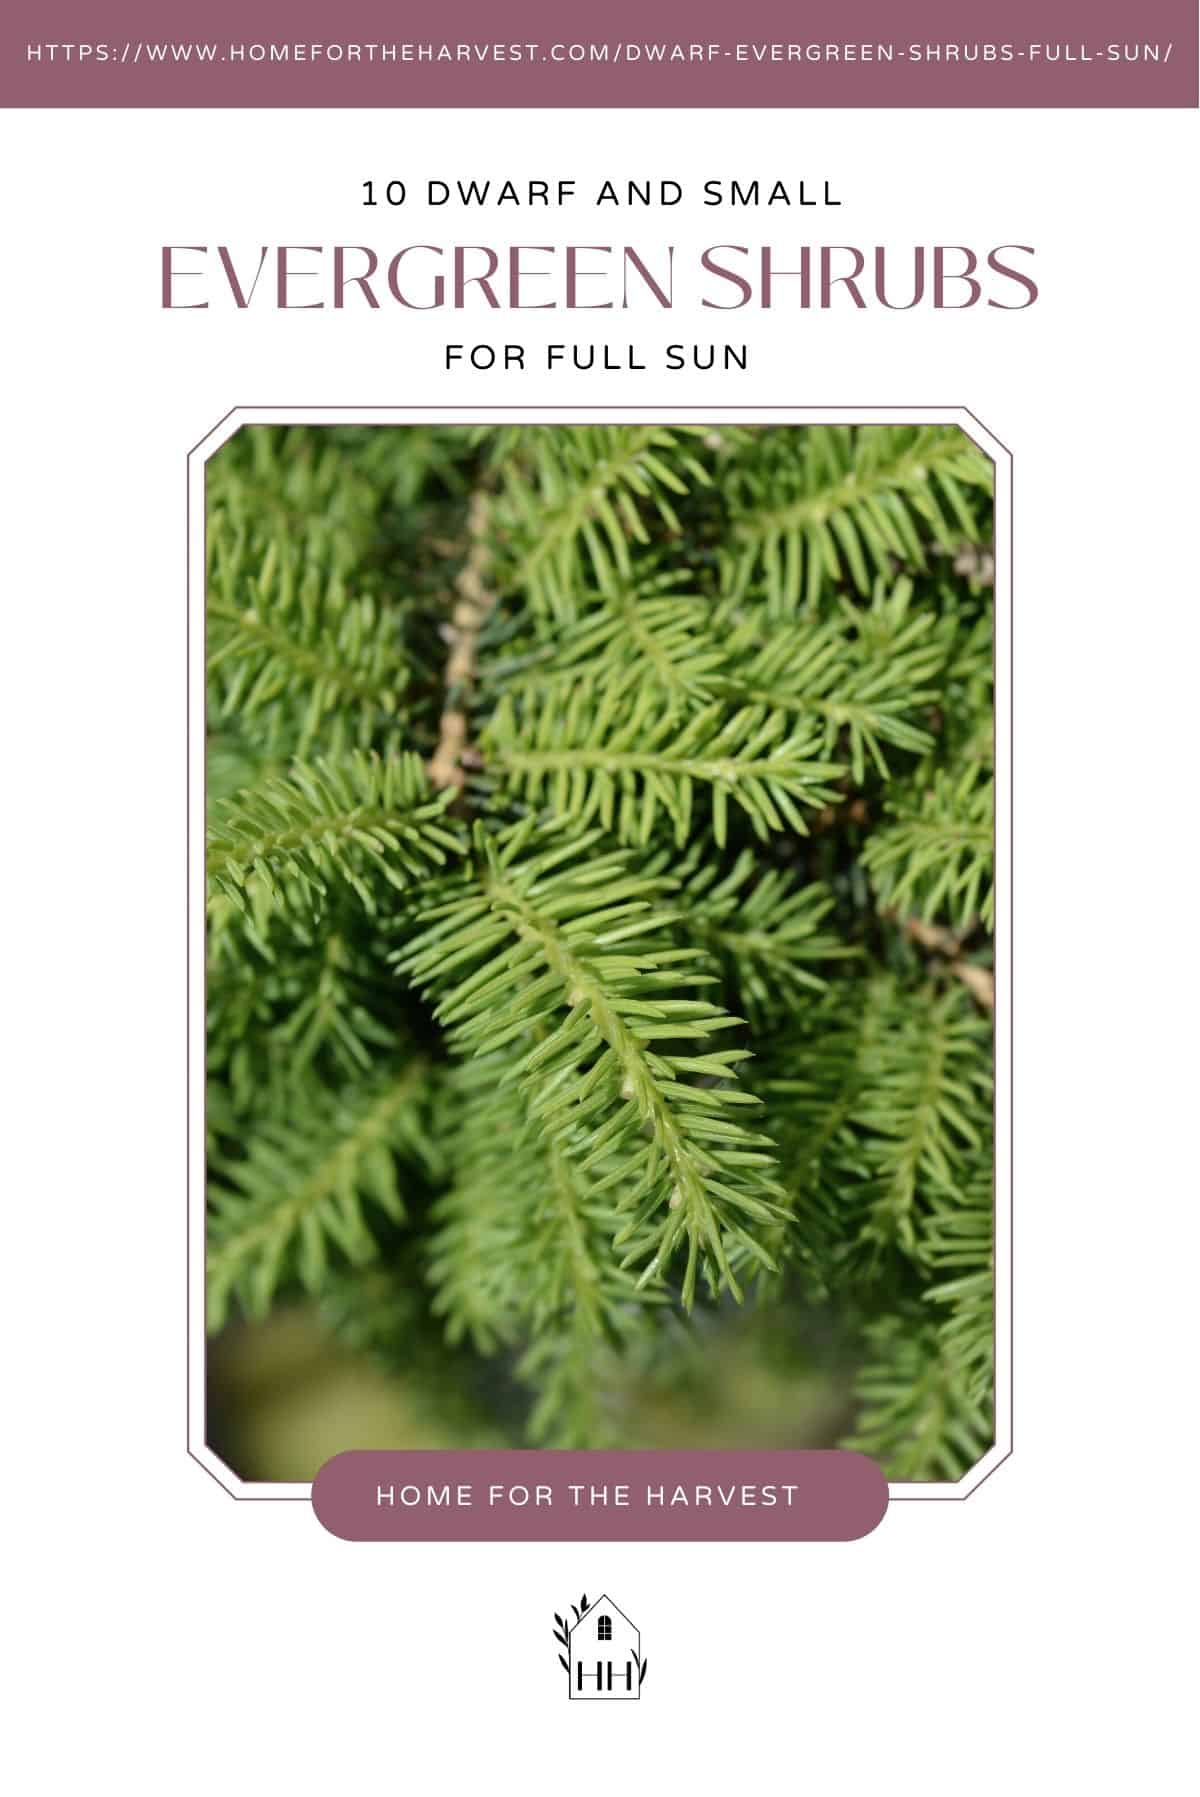 10 dwarf and small evergreen shrubs for full sun - pinterest via @home4theharvest